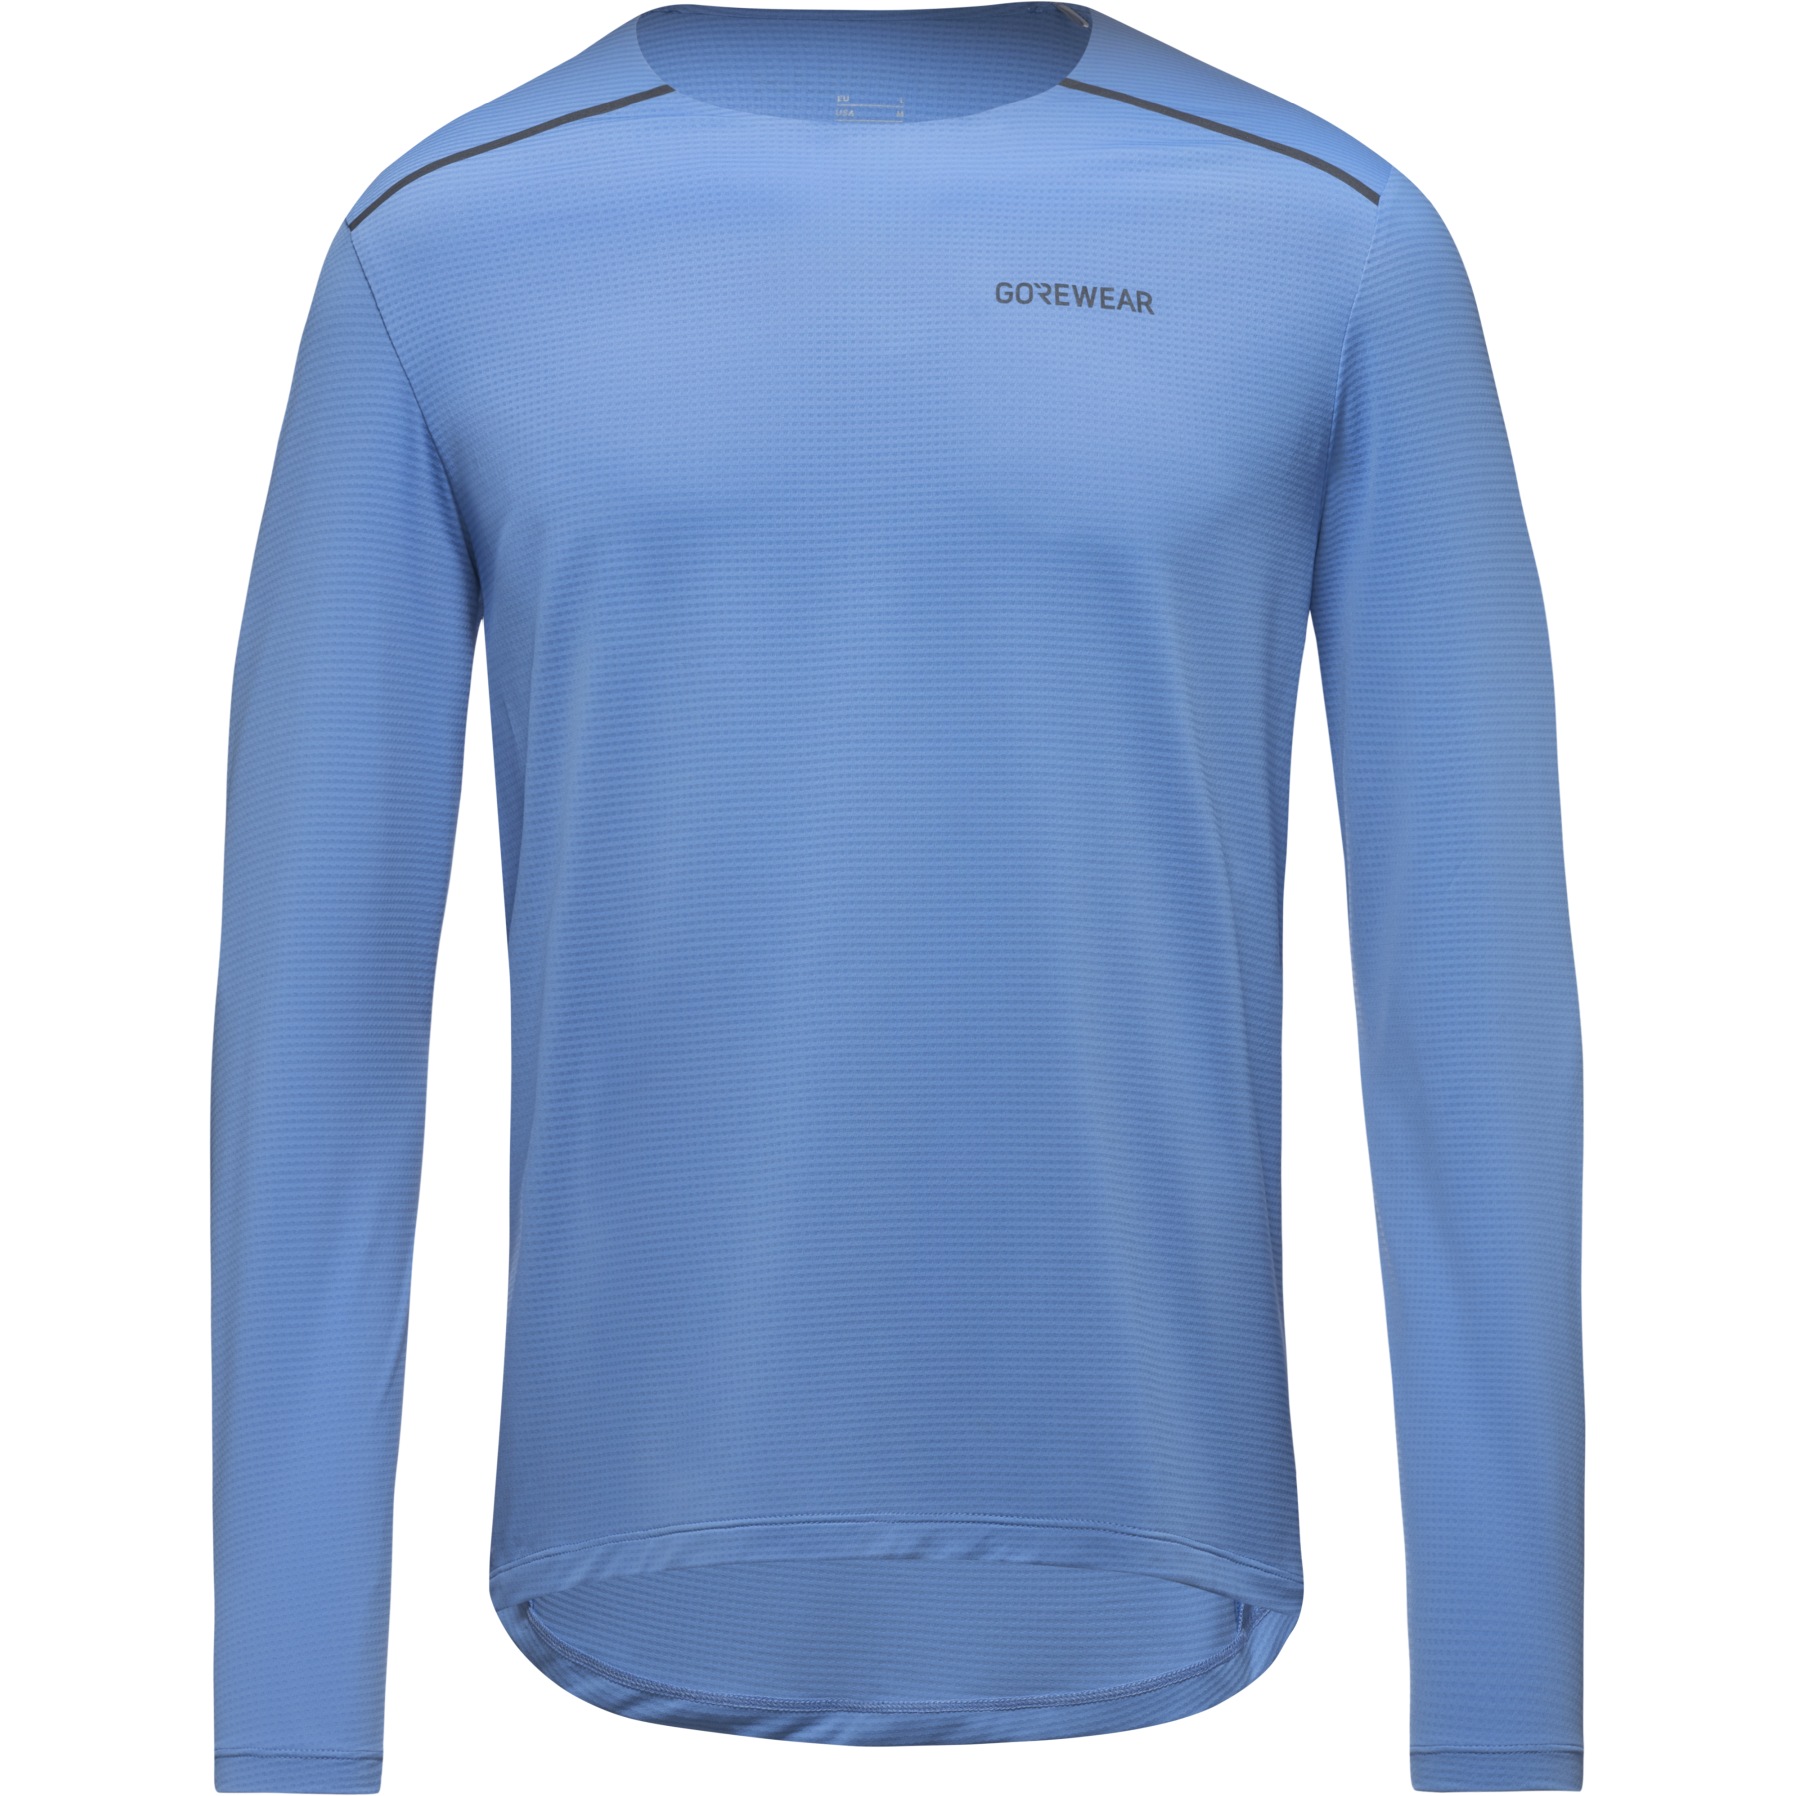 Productfoto van GOREWEAR Contest 2.0 Shirt met Lange Mouwen Heren - scrub blue BV00